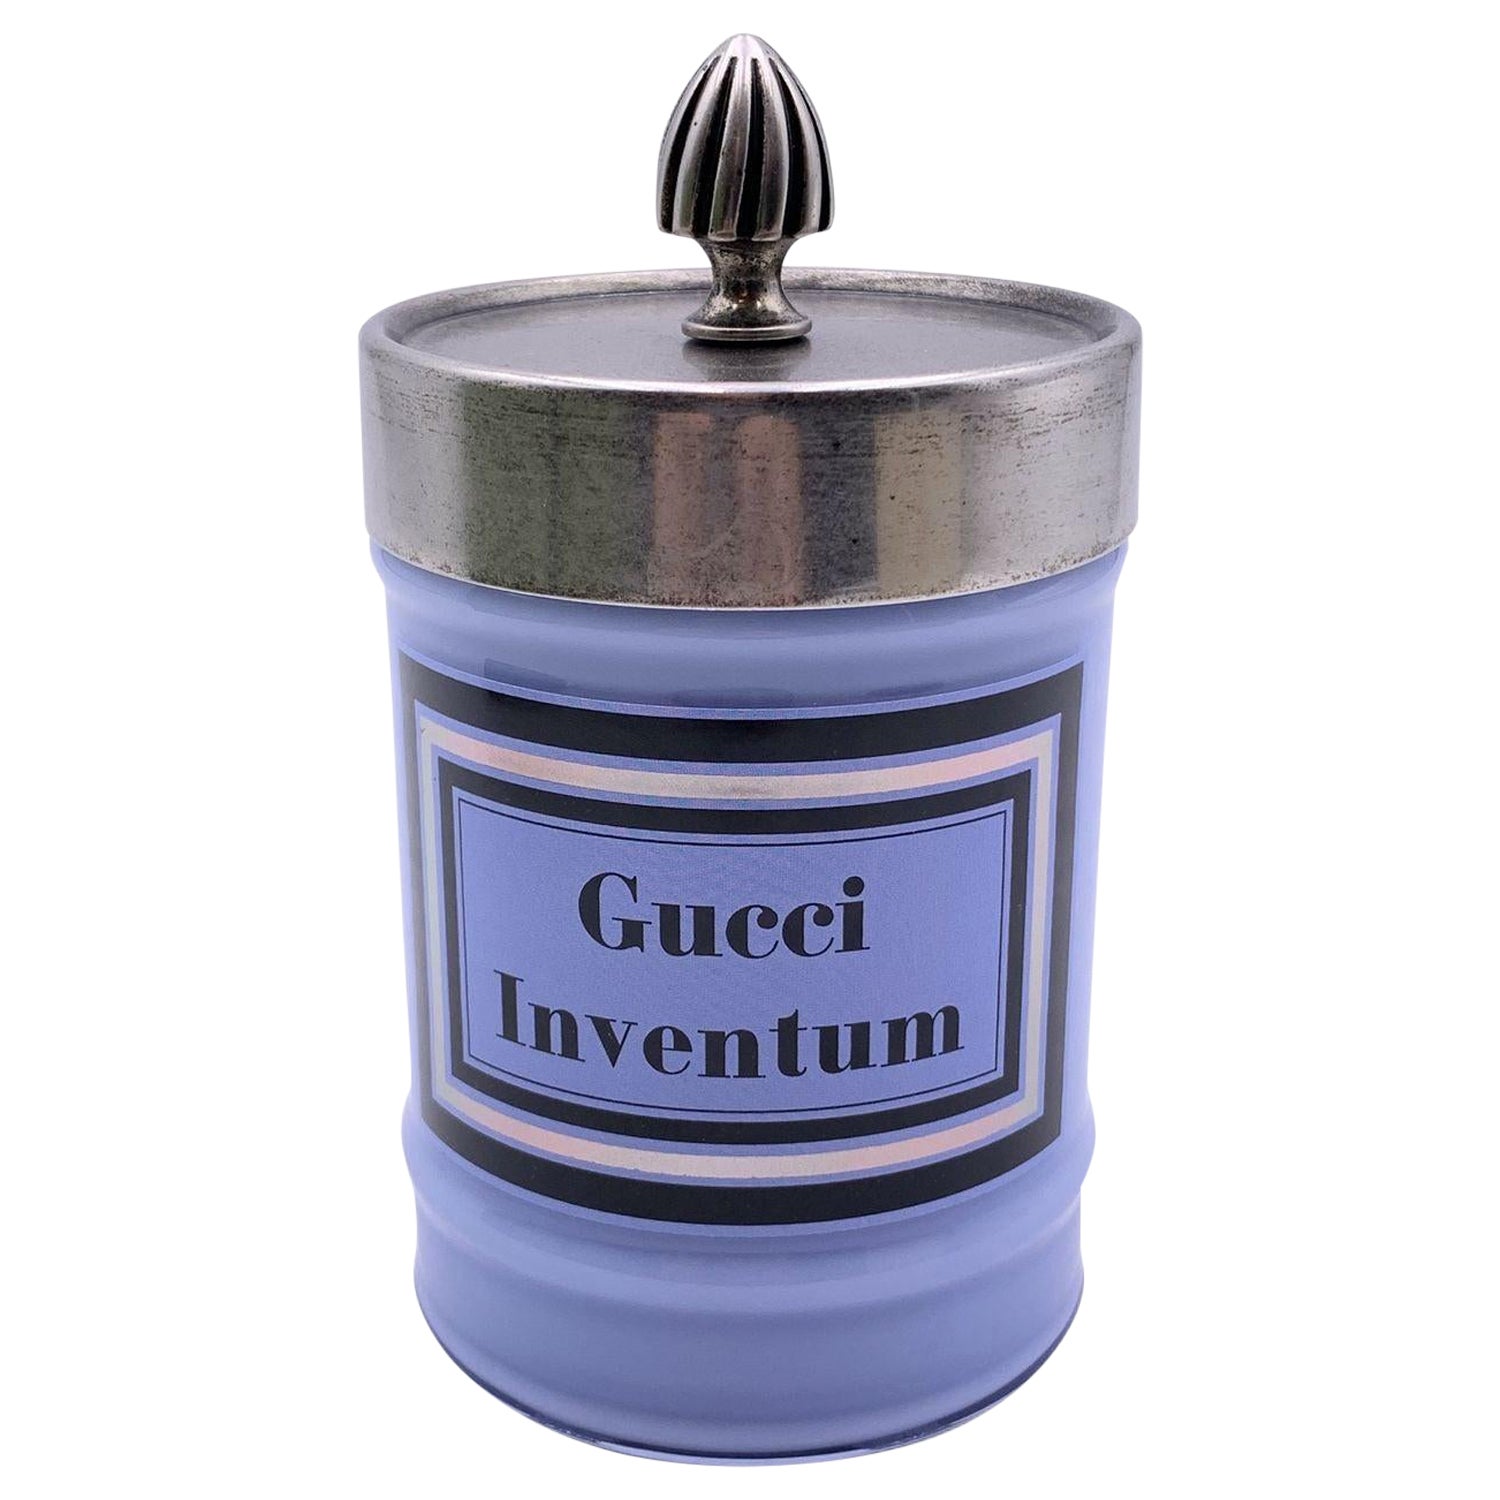 Gucci Inventum Duftkerze Light Blue Murano Glas JAR im Angebot